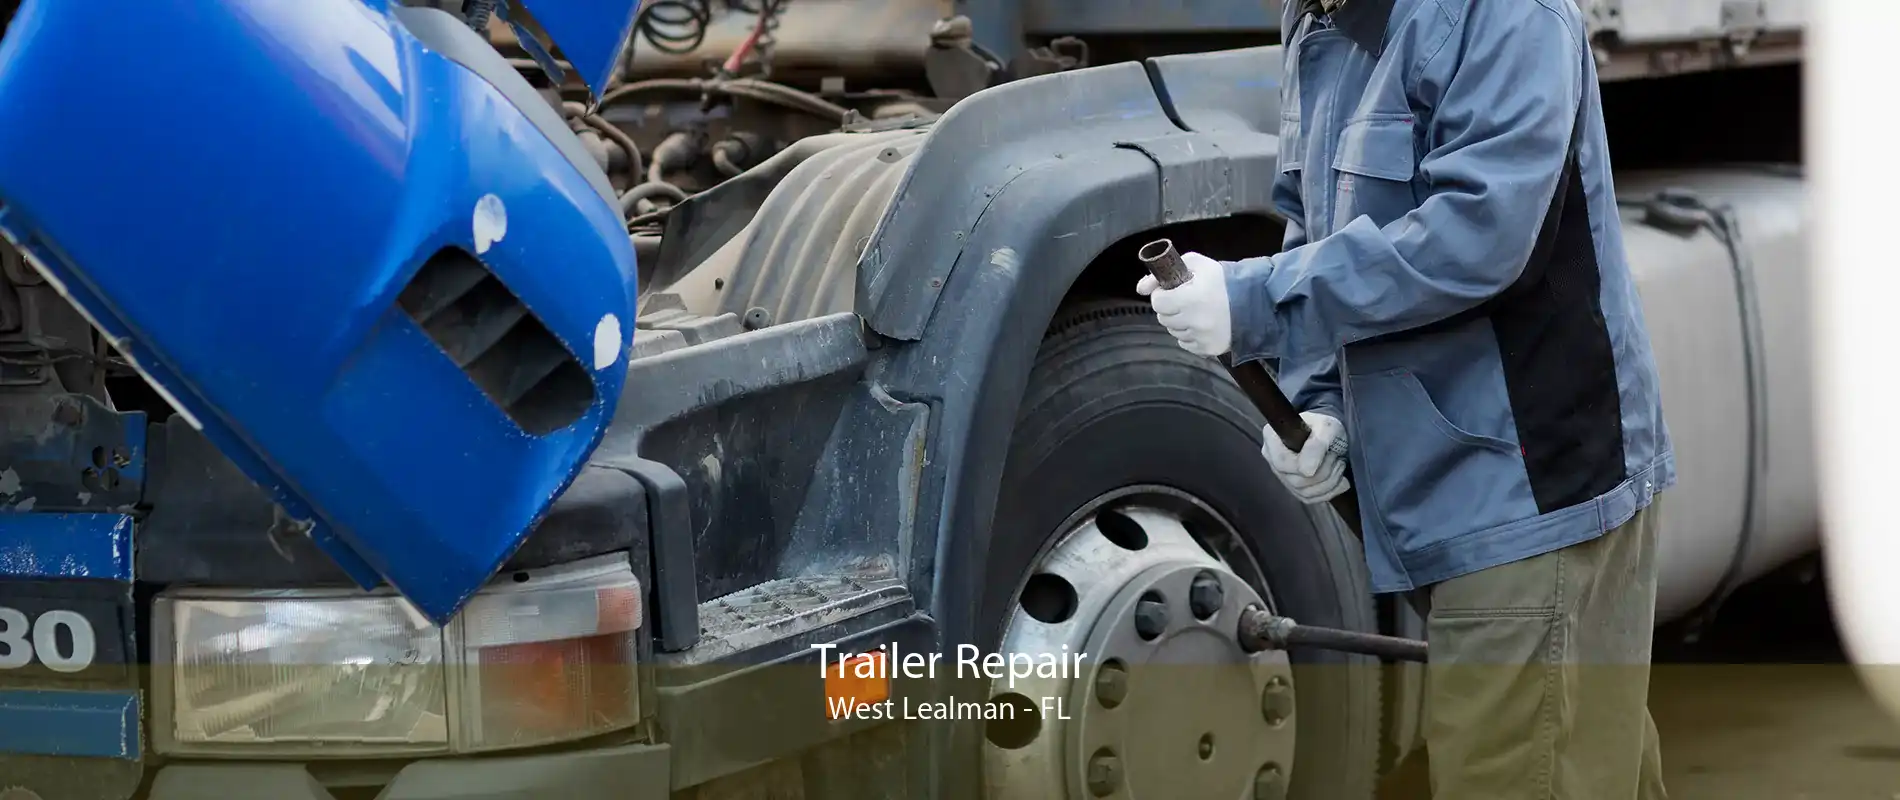 Trailer Repair West Lealman - FL